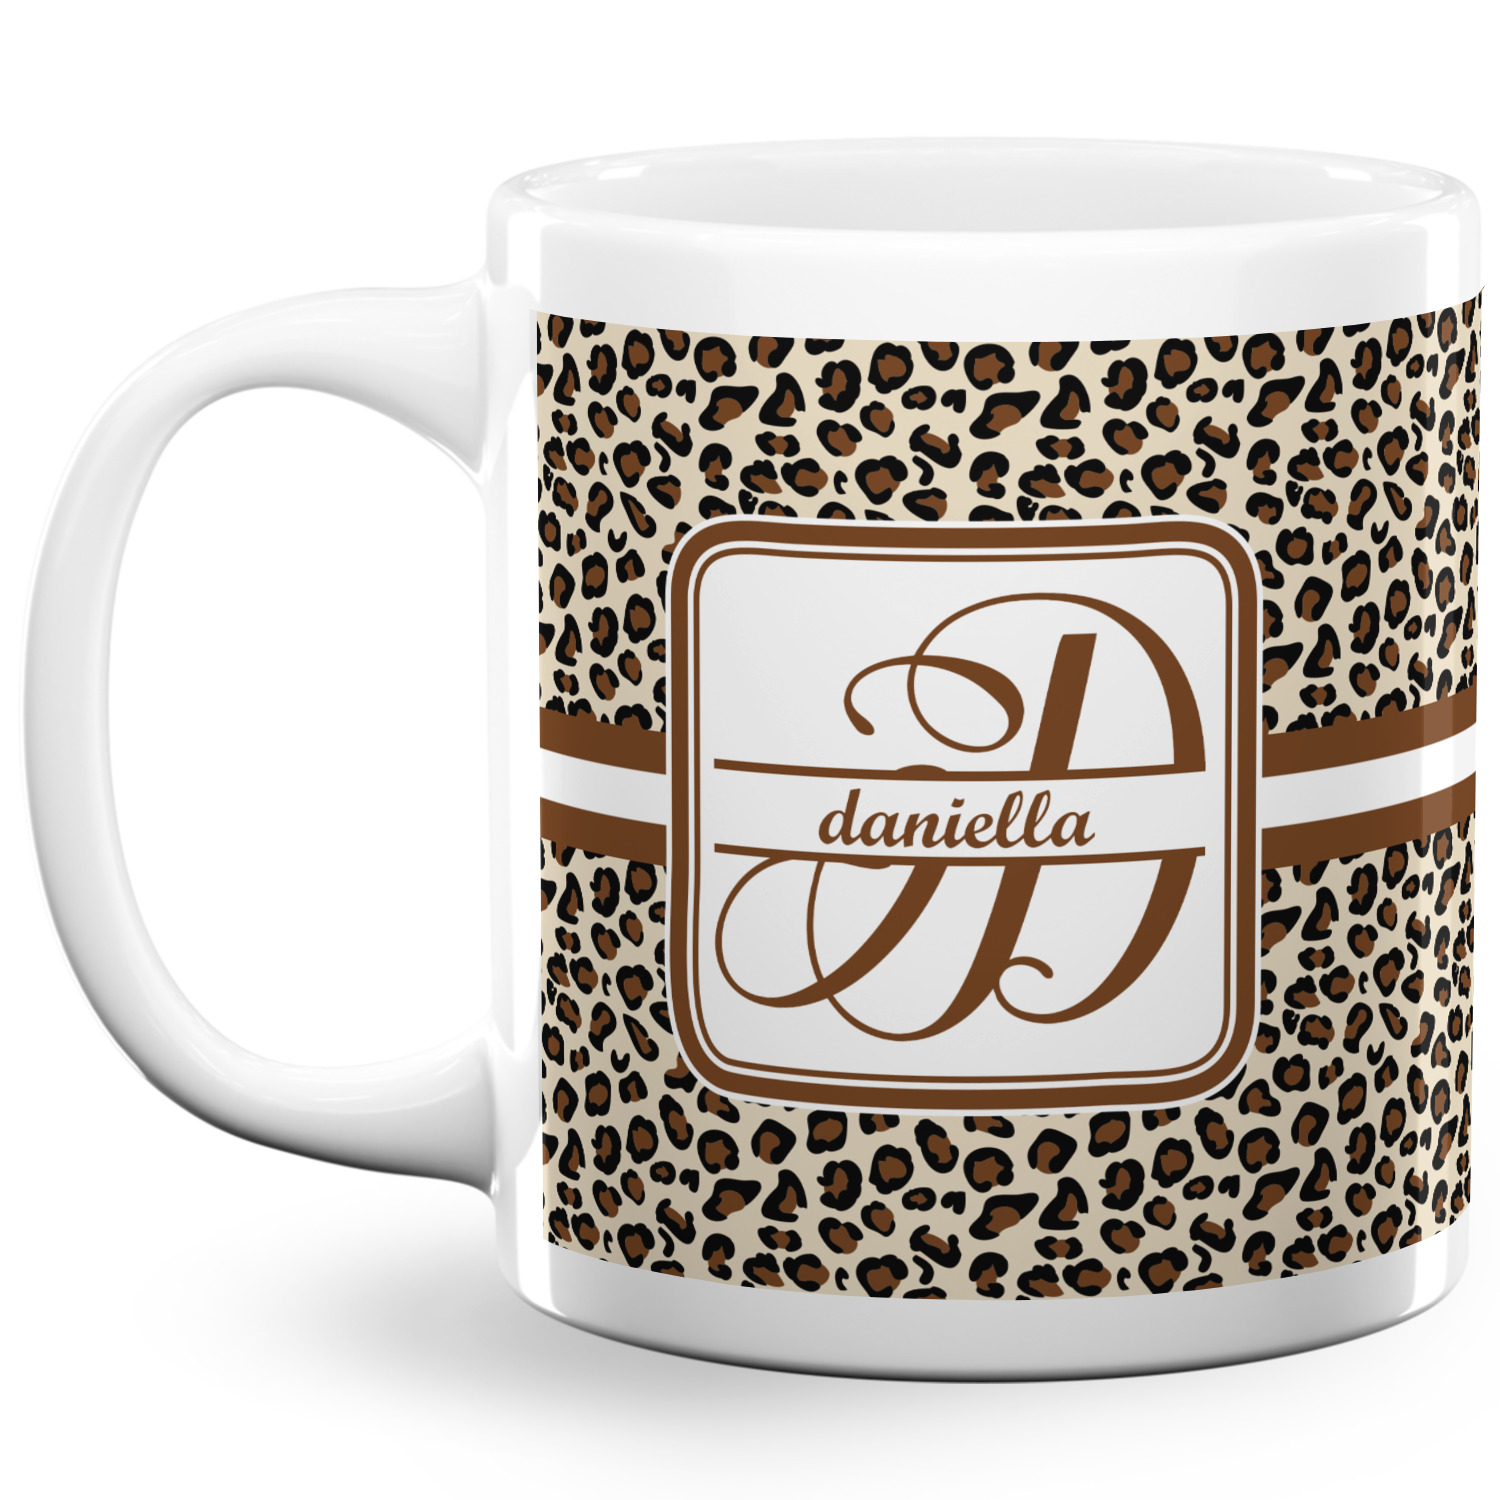 https://www.youcustomizeit.com/common/MAKE/74570/Leopard-Print-Coffee-Mug-20-oz-White.jpg?lm=1604013890